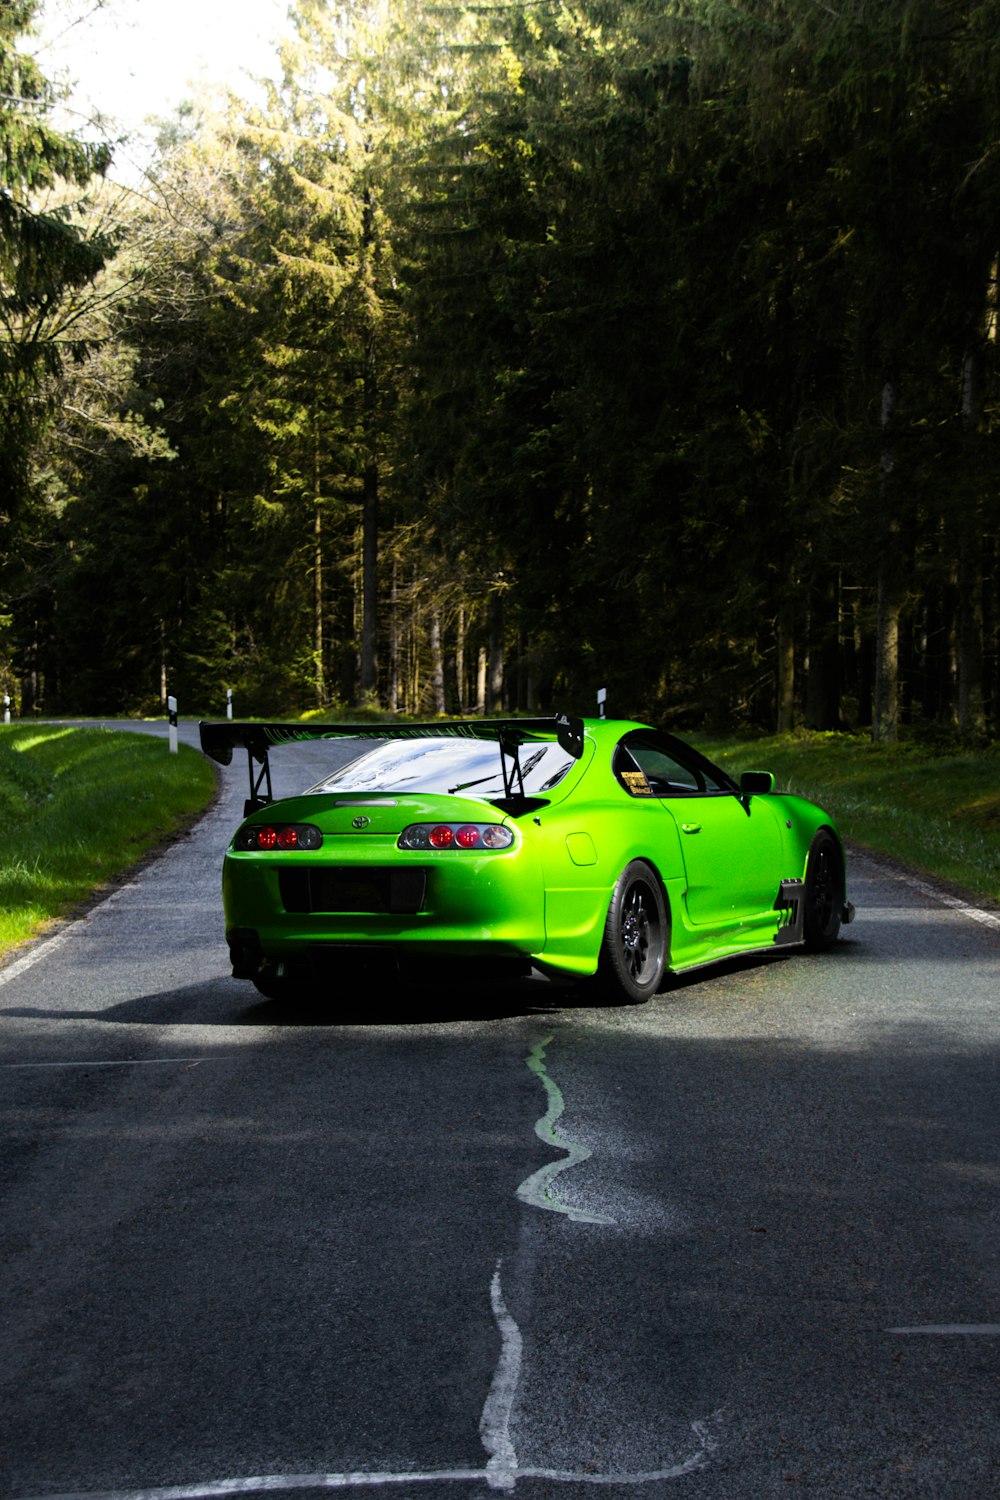 a bright green sports car driving down a road